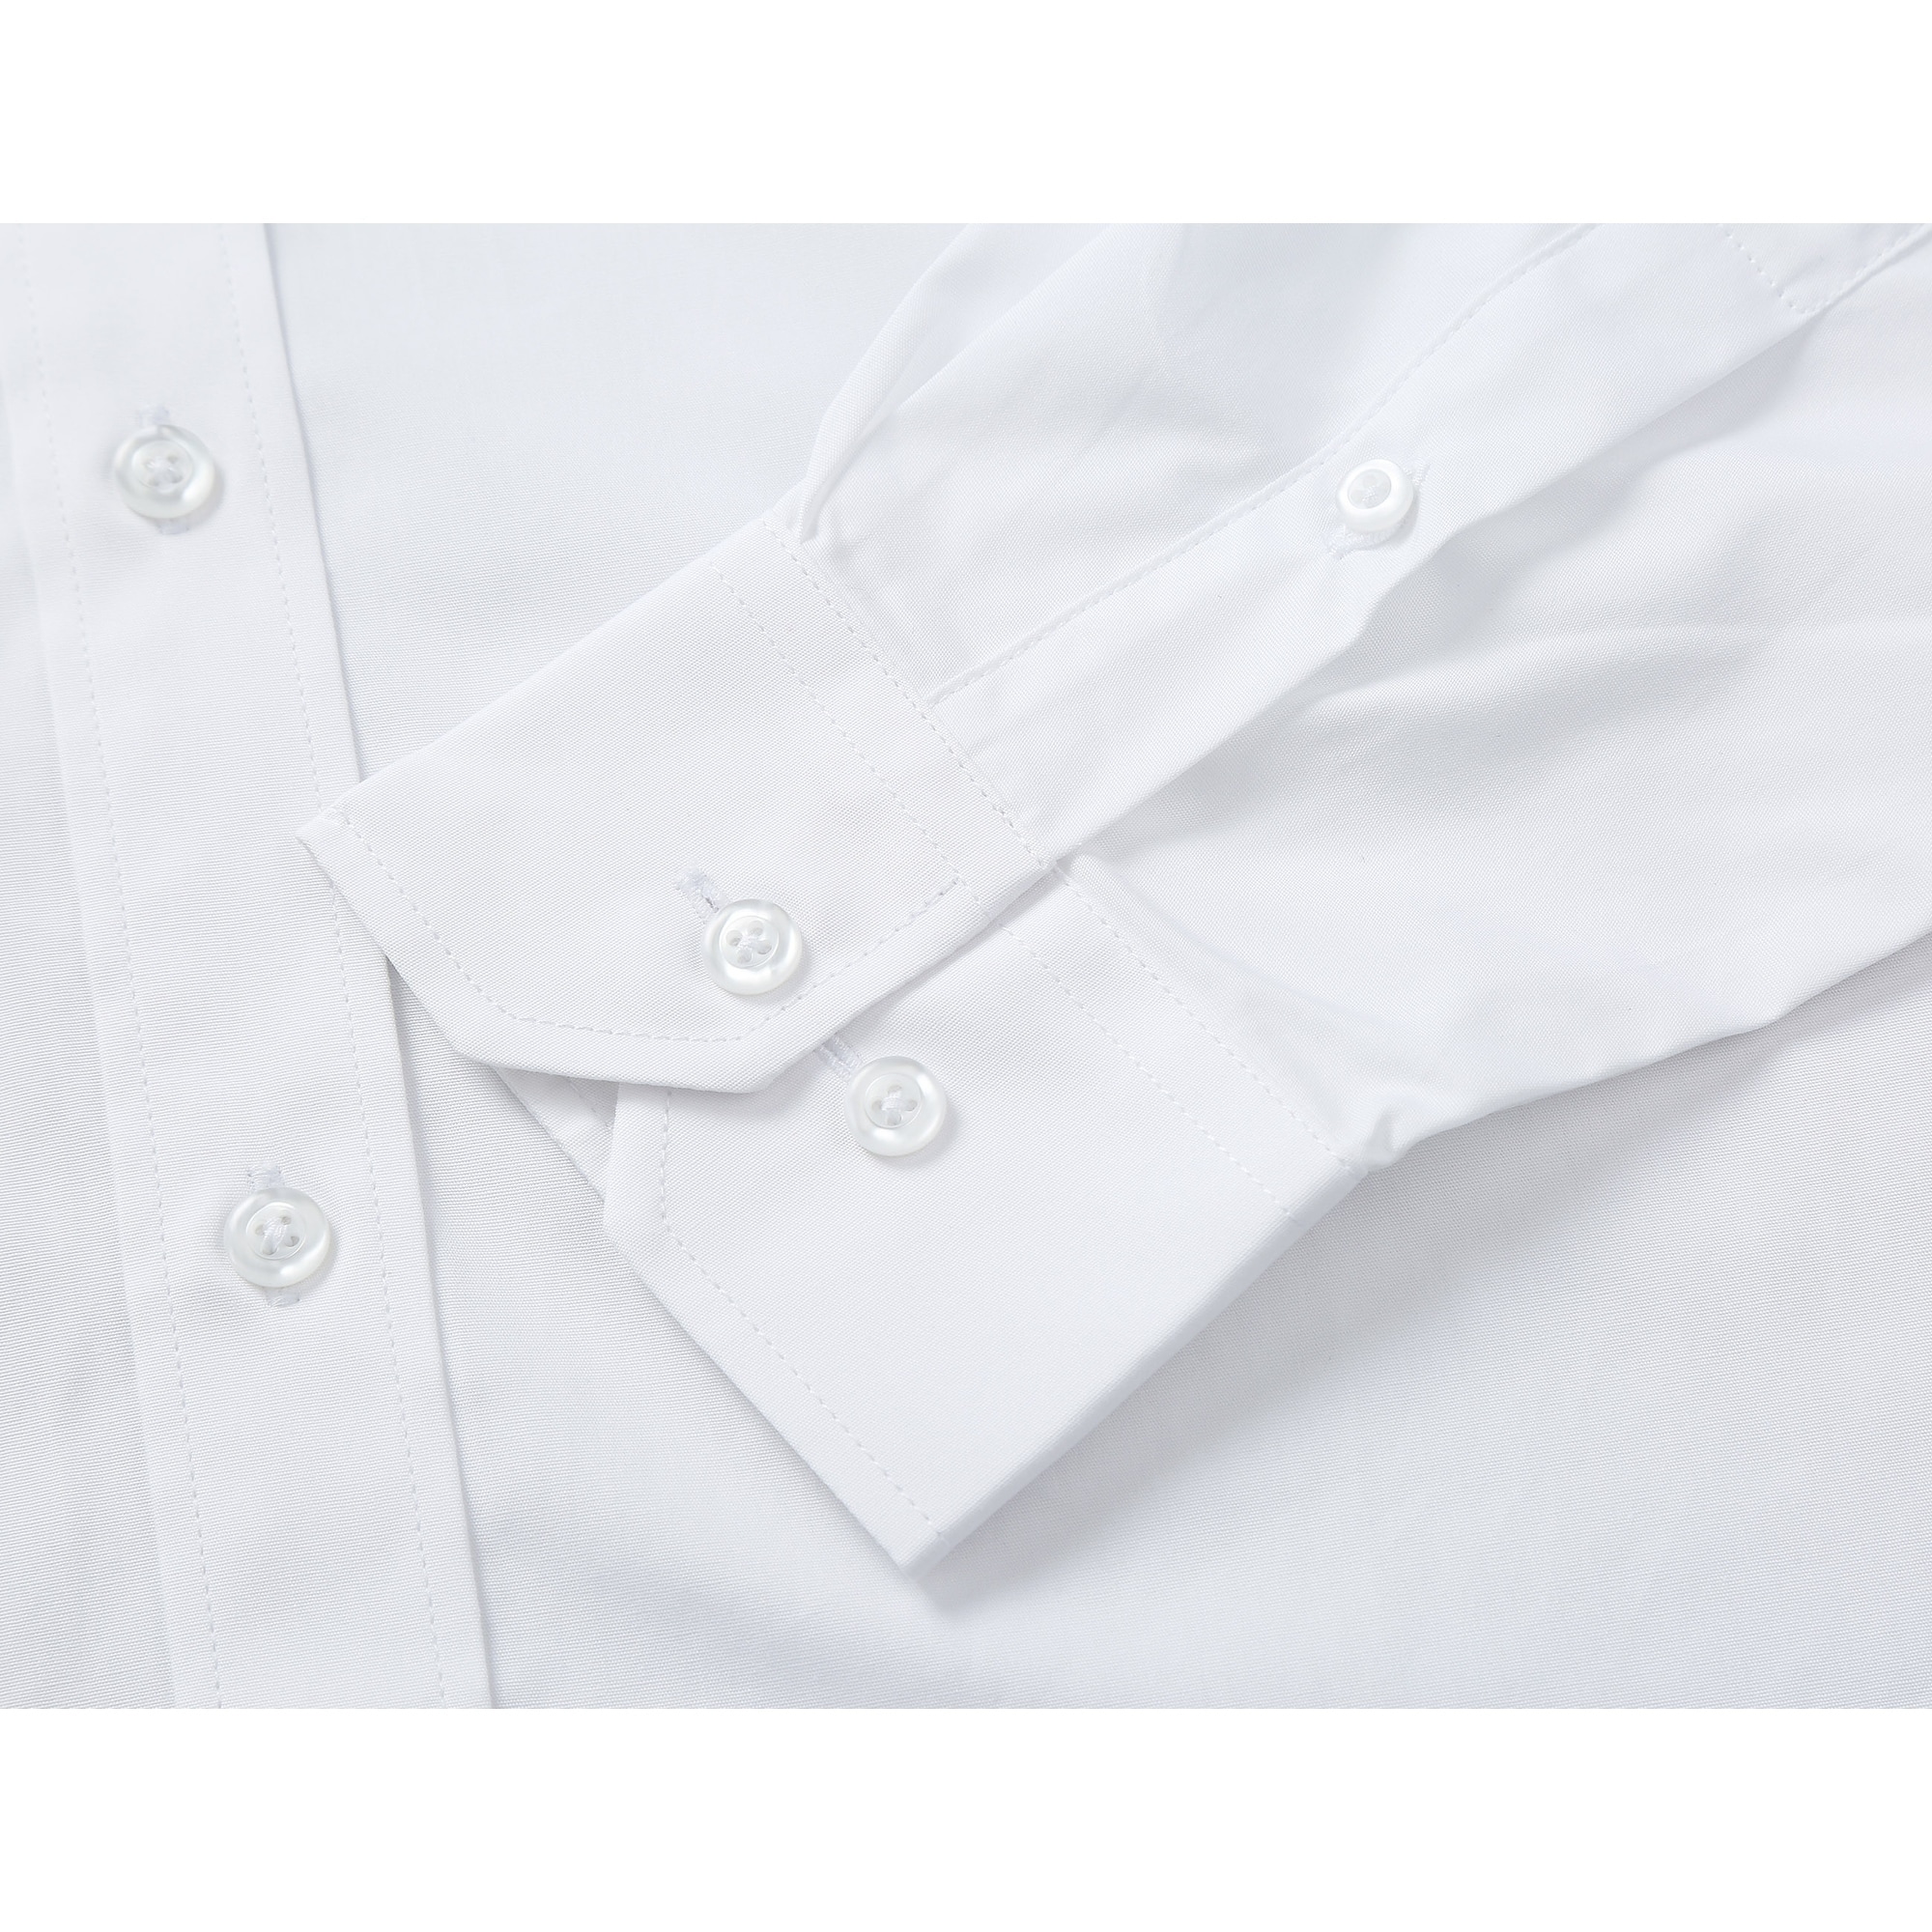 mens white dress shirt 100 cotton